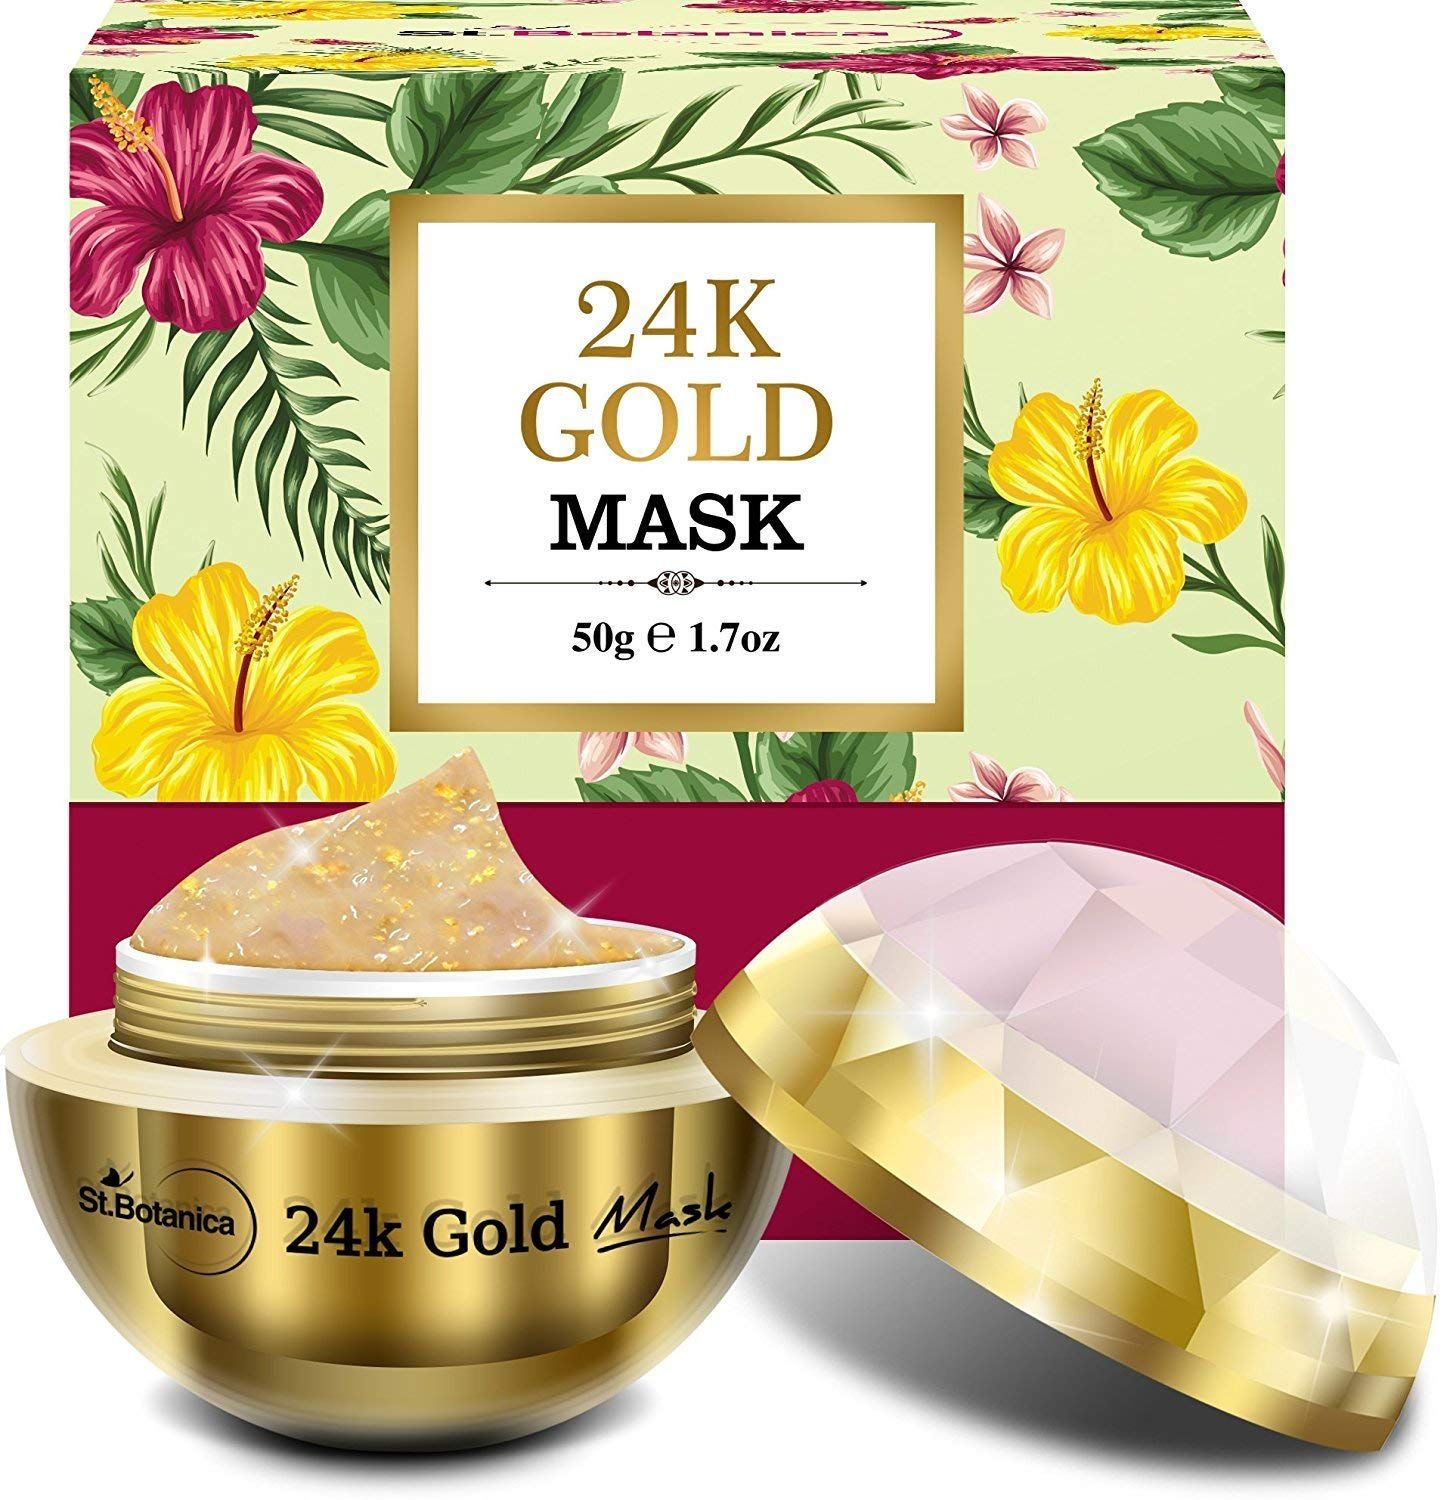 St.Botanica 24K Gold Face Mask